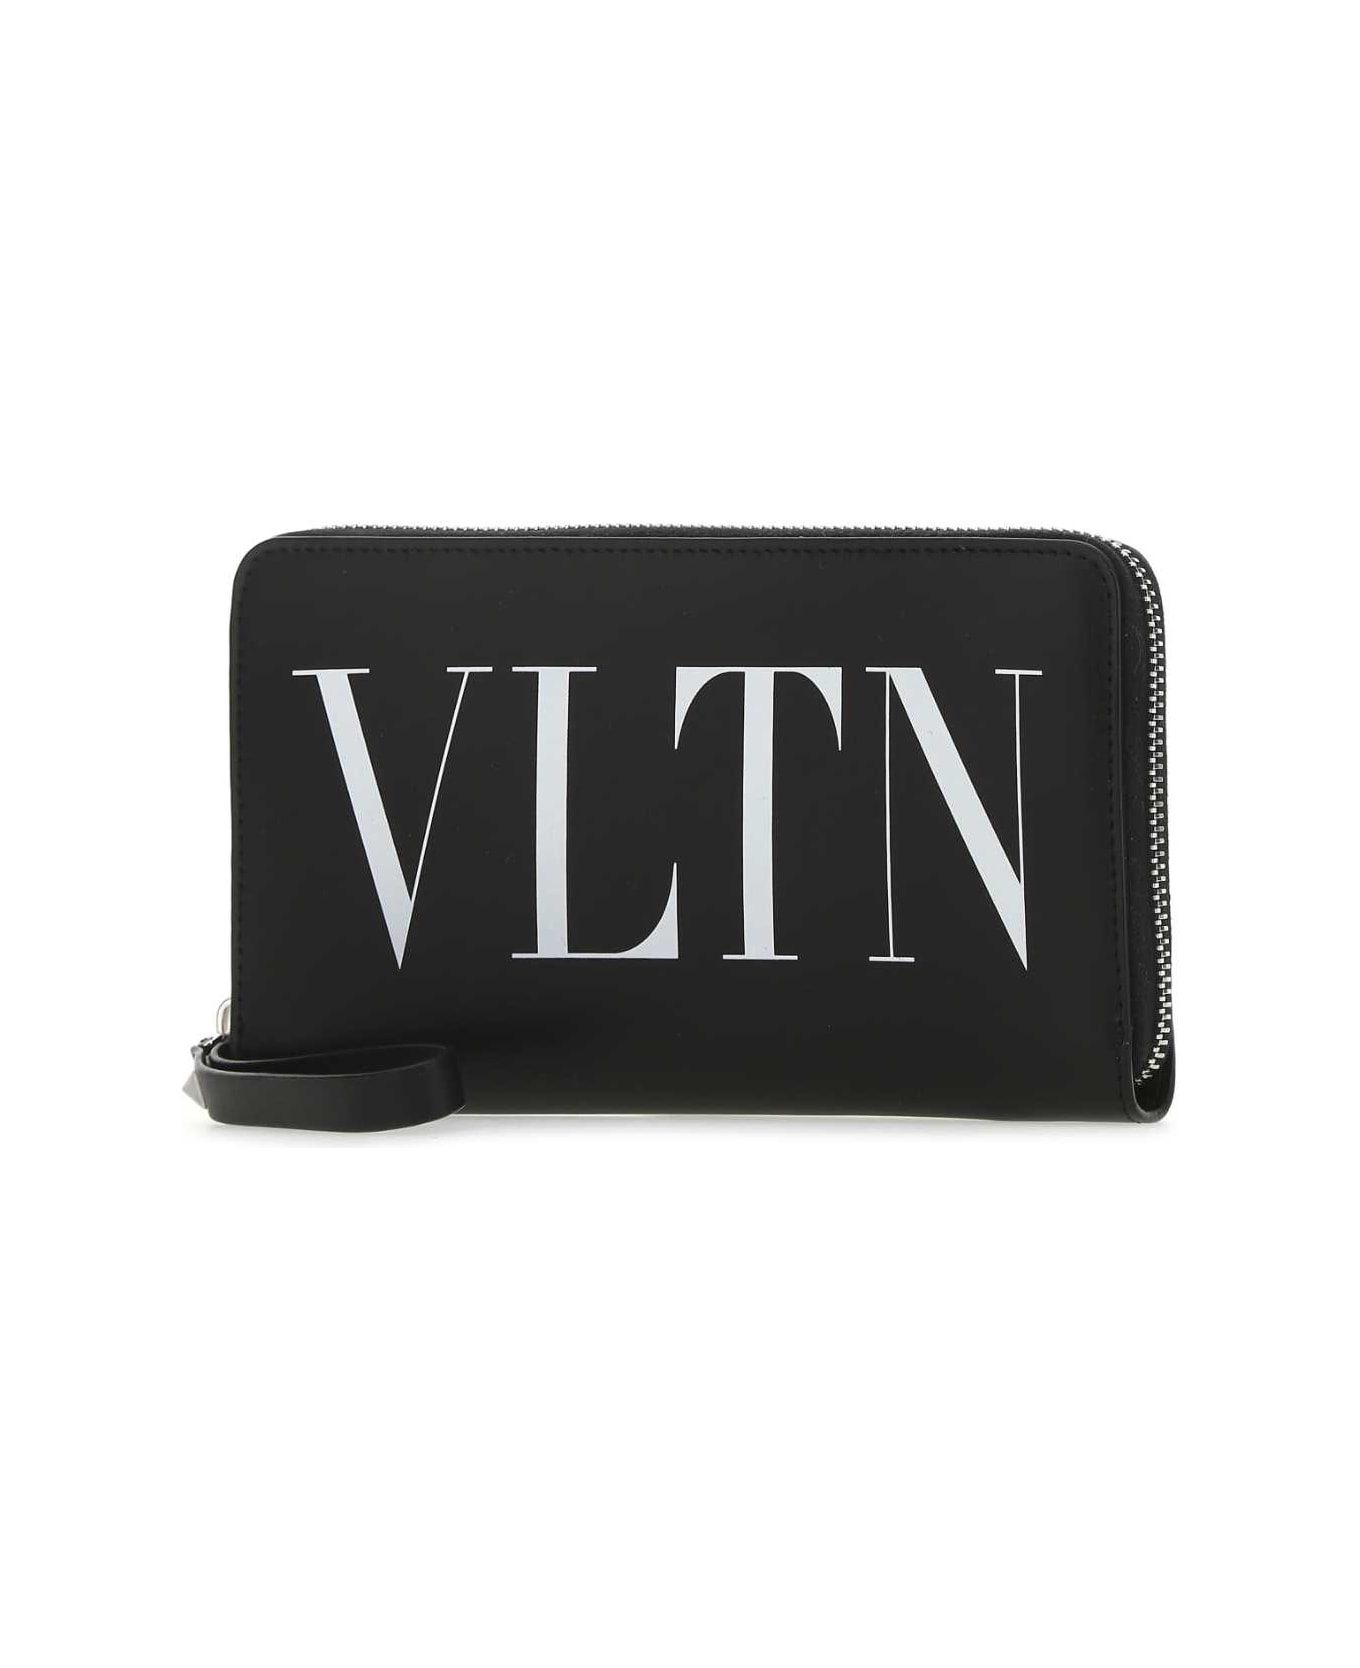 Valentino Garavani Black Leather Vltn Wallet - NEROBIANCO 財布